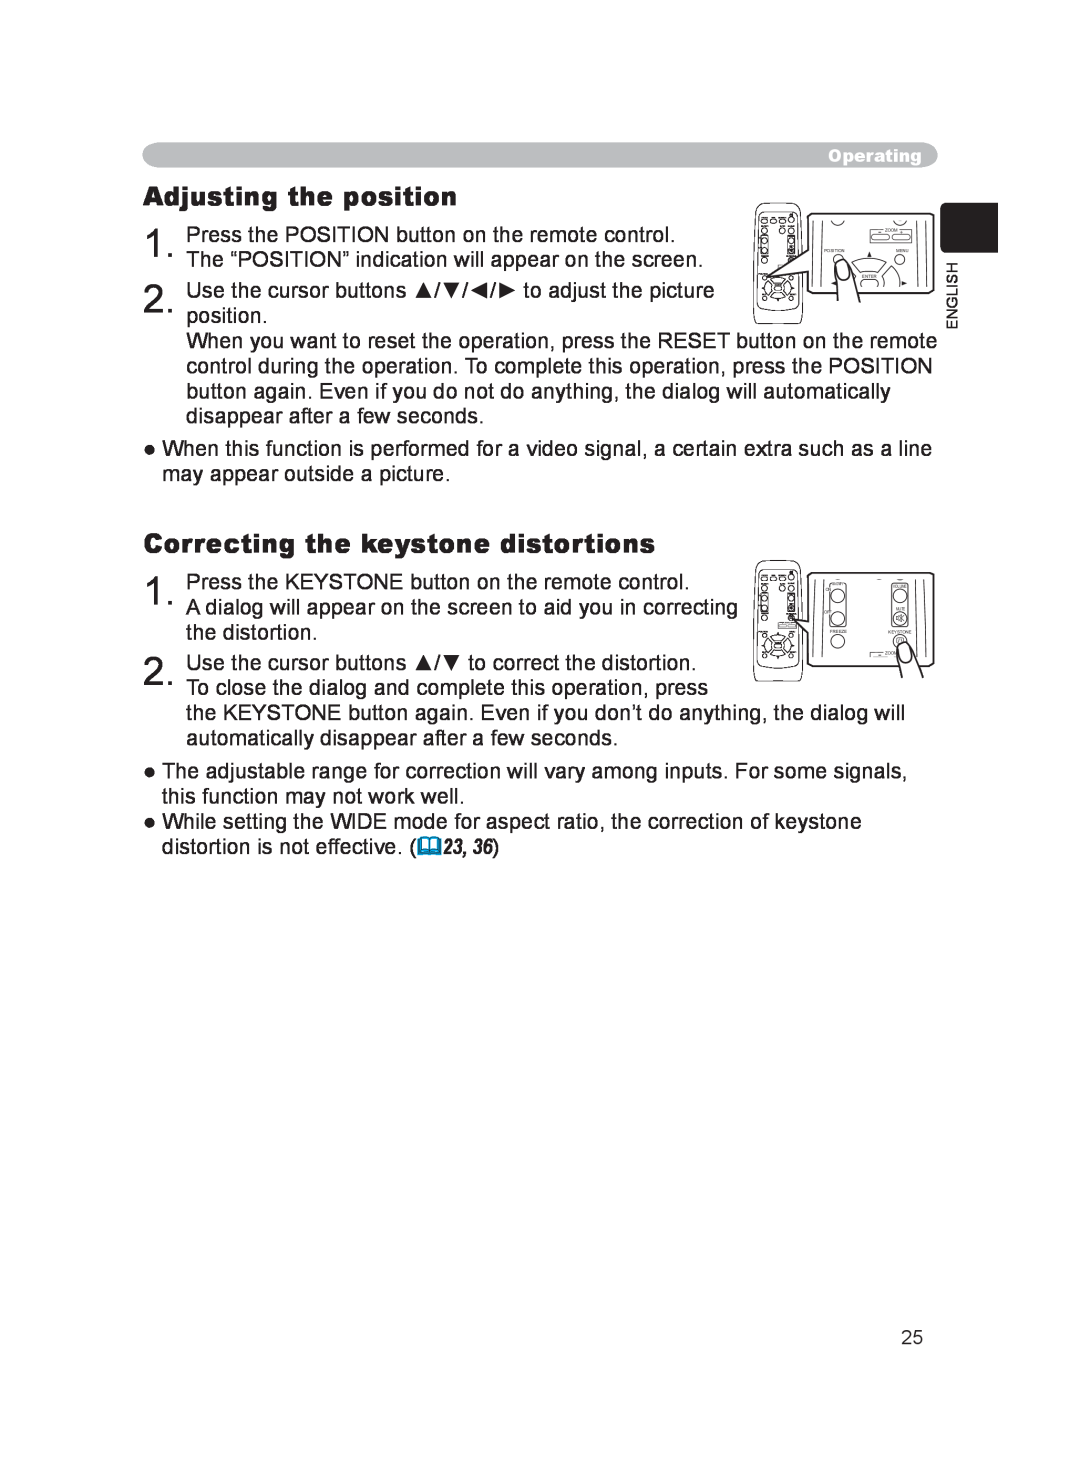 Hitachi PJ-LC9 user manual Adjusting the position, Correcting the keystone distortions 